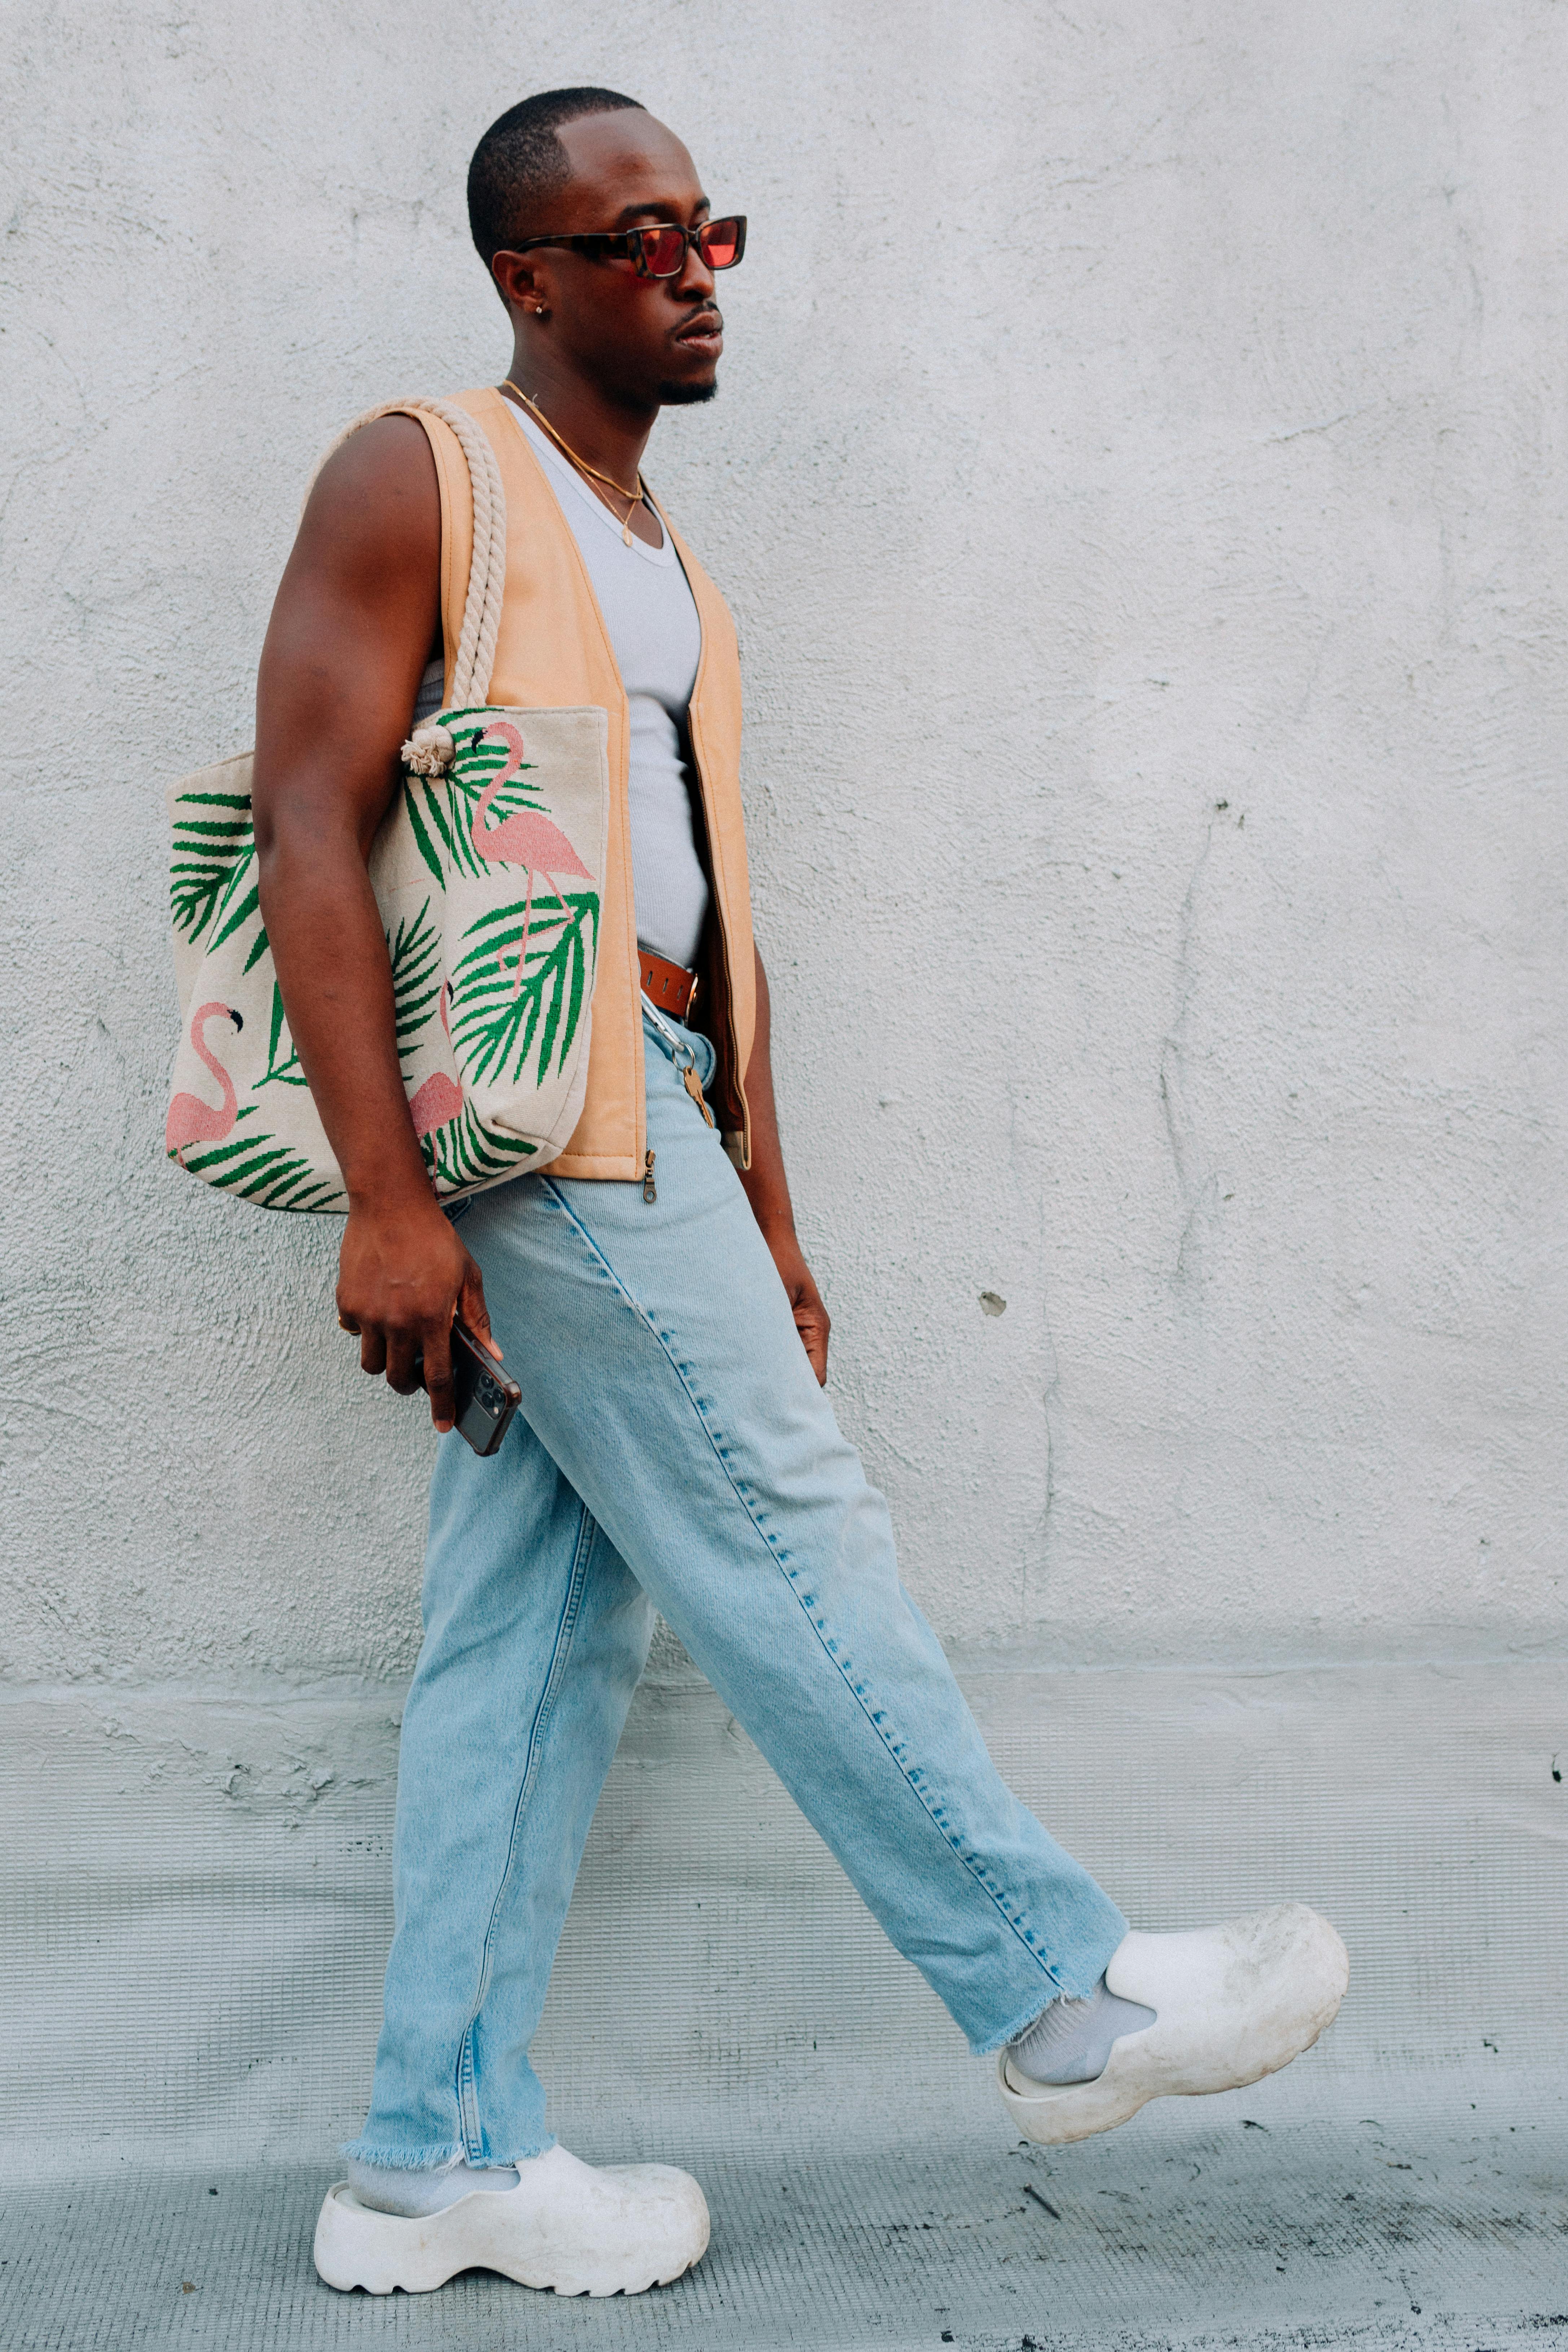 free photo of black man with summer shopping bag posing near wall